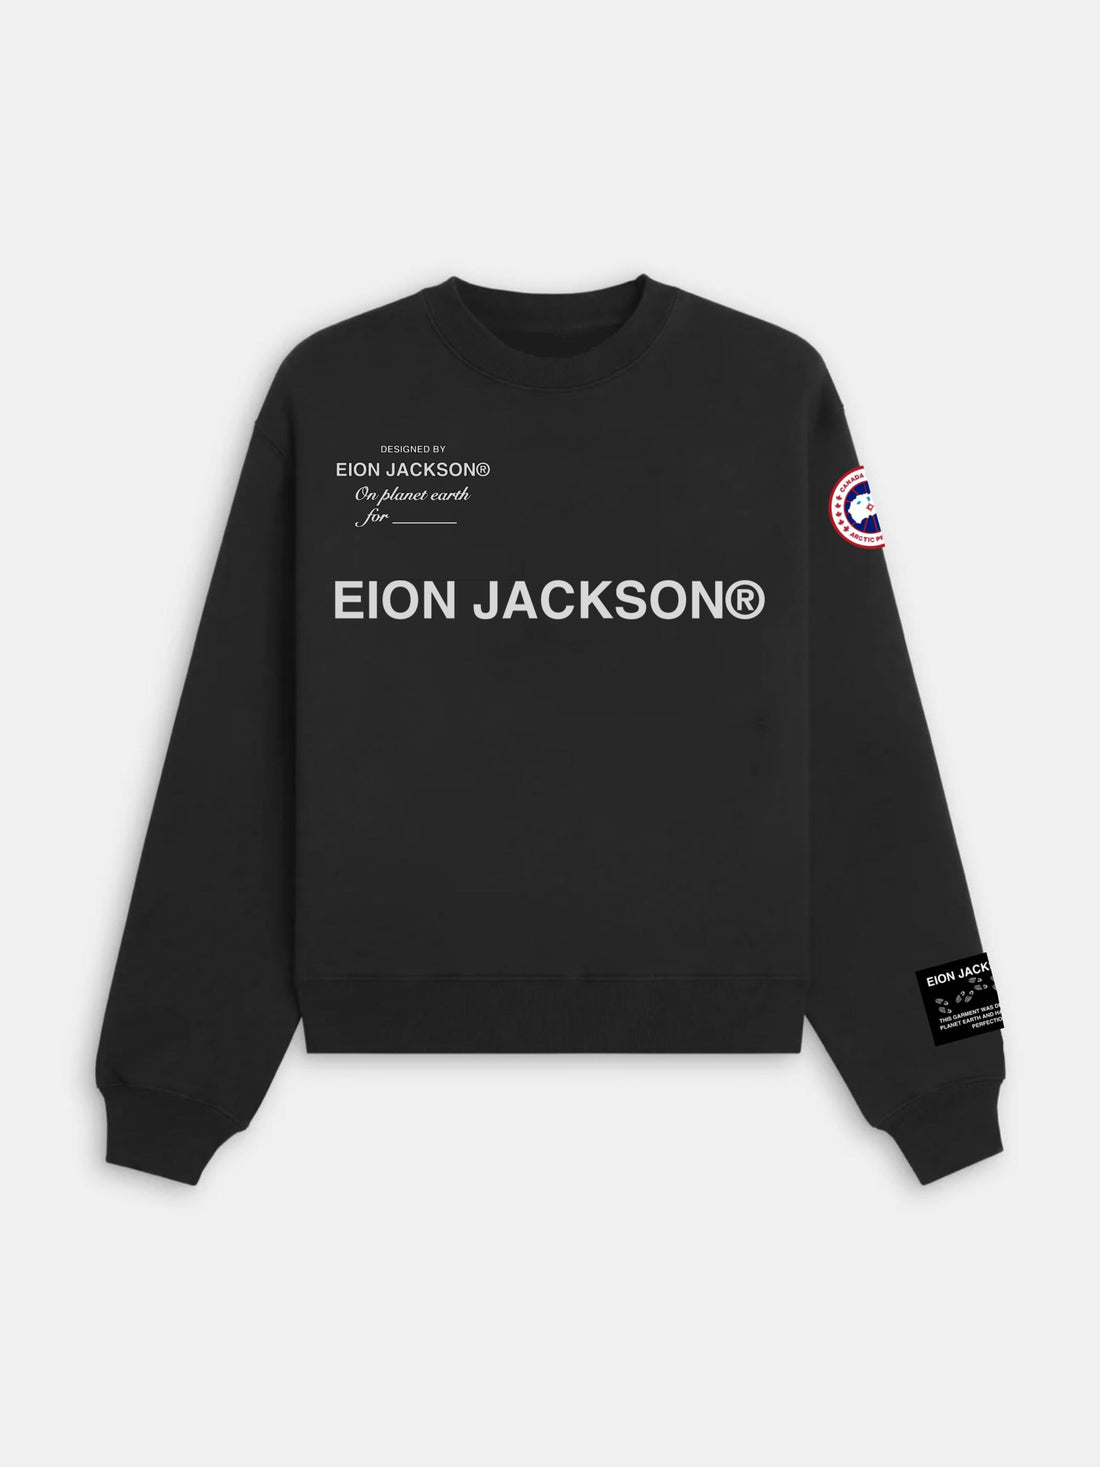 EION JACKSON® CANADA GOOSE CREWNECK SWEATER [BLACK]